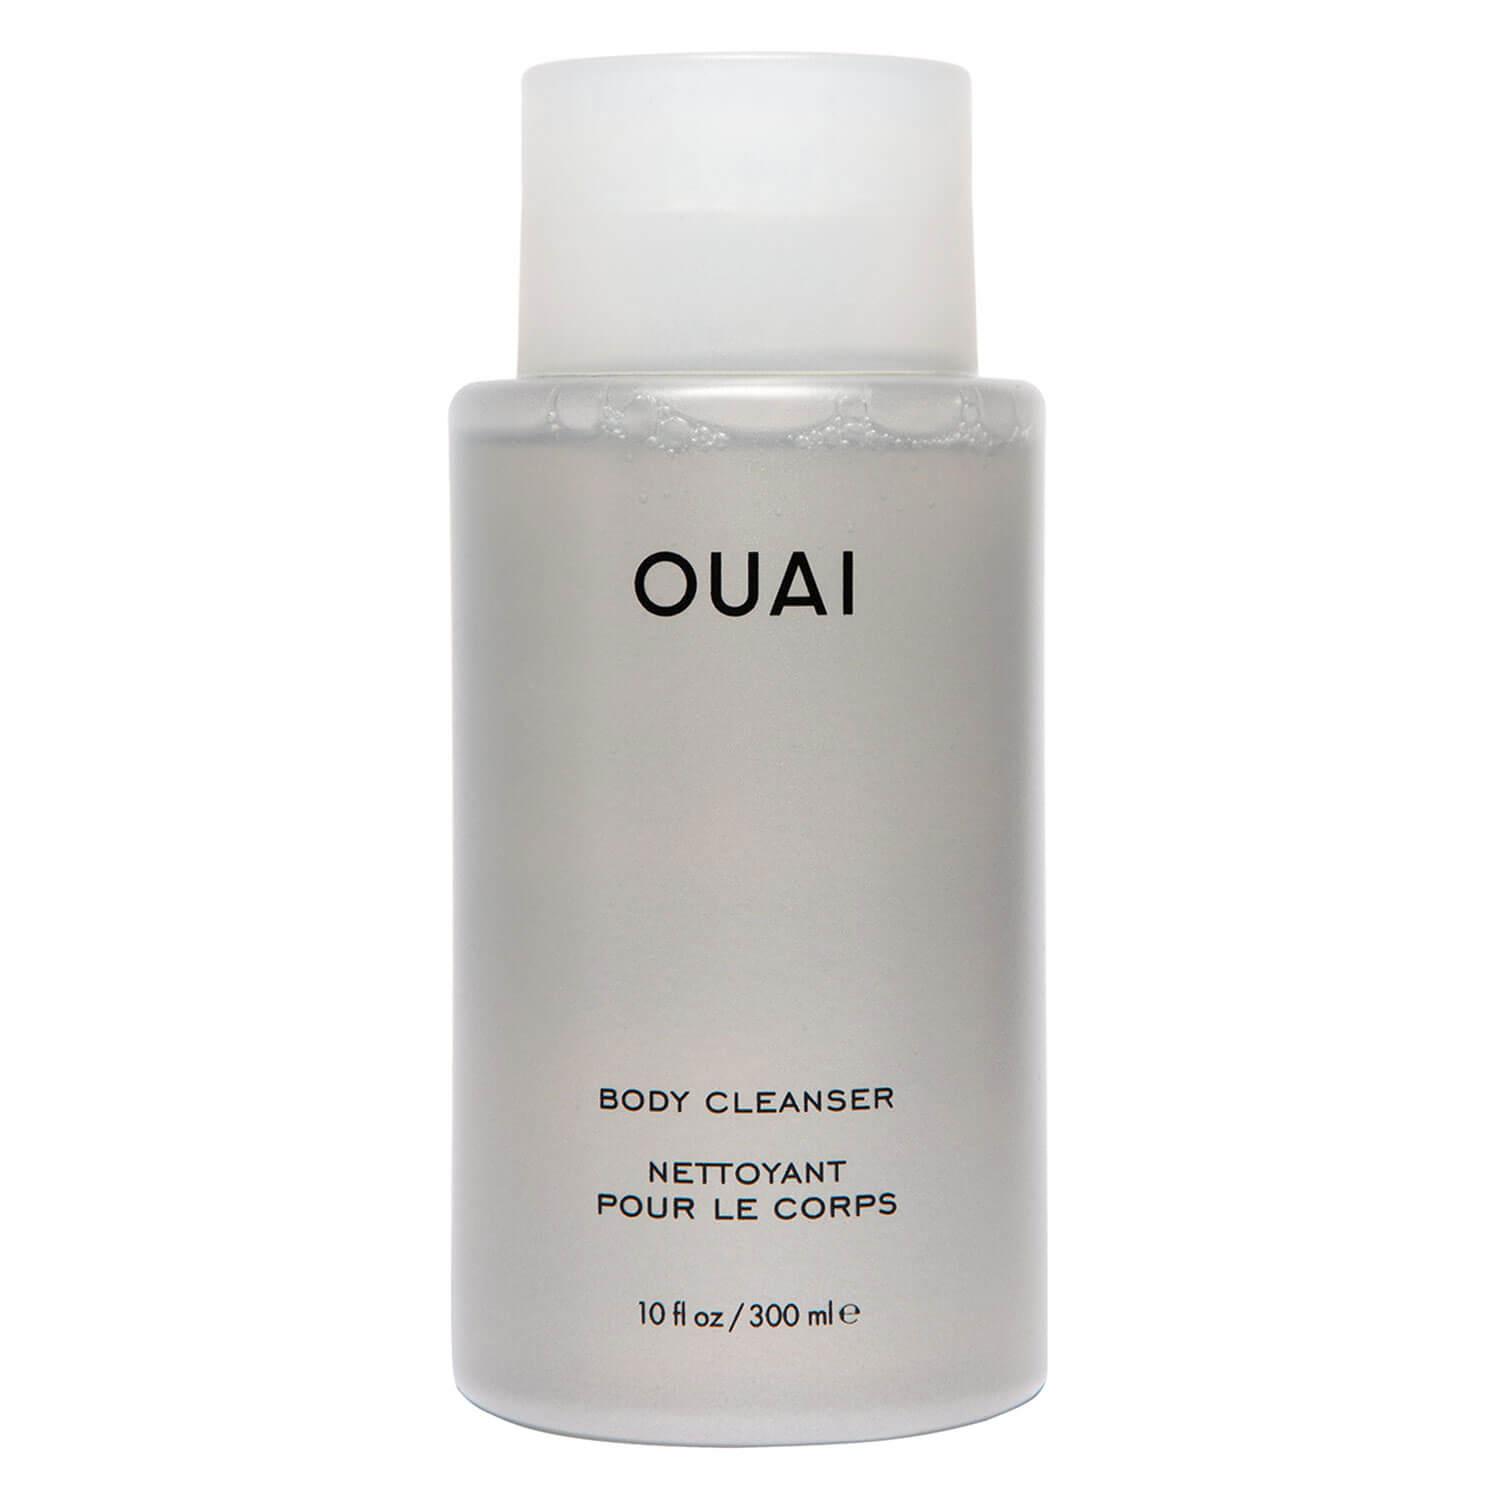 OUAI - Body Cleanser